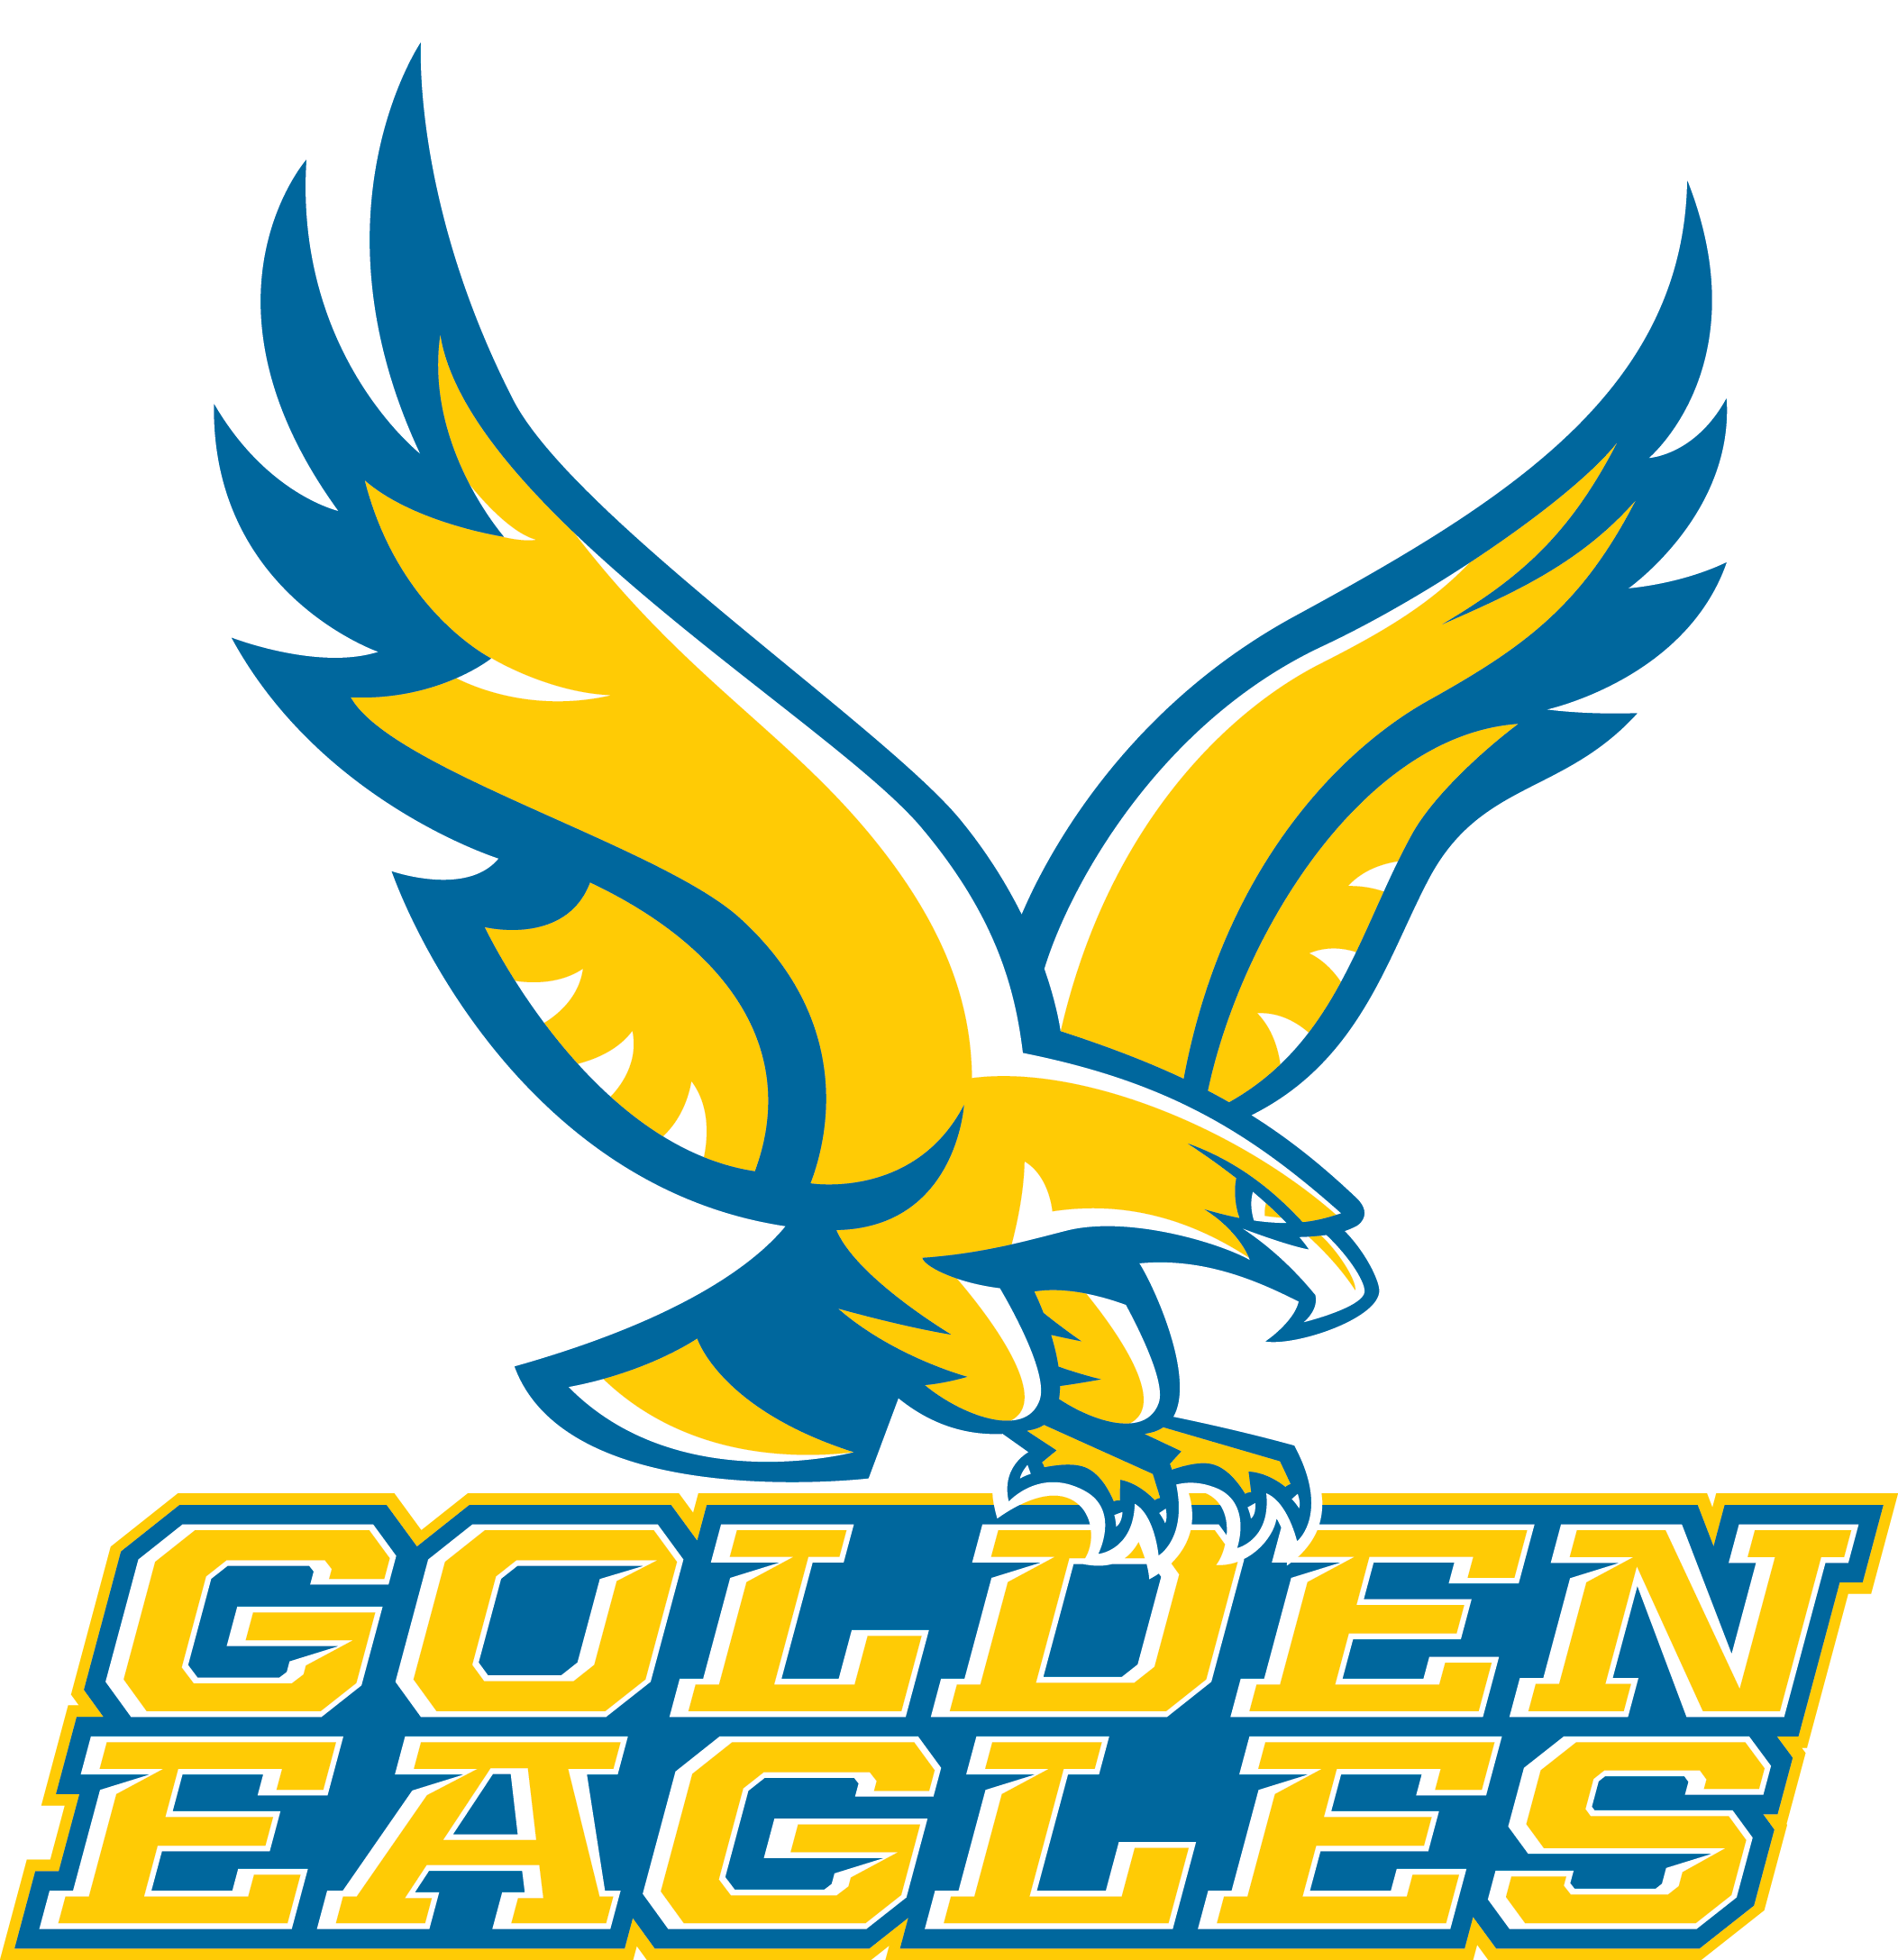 Gold and Blue Eagle Logo - Athletic Logos - About Us - Holy Family Catholic Schools